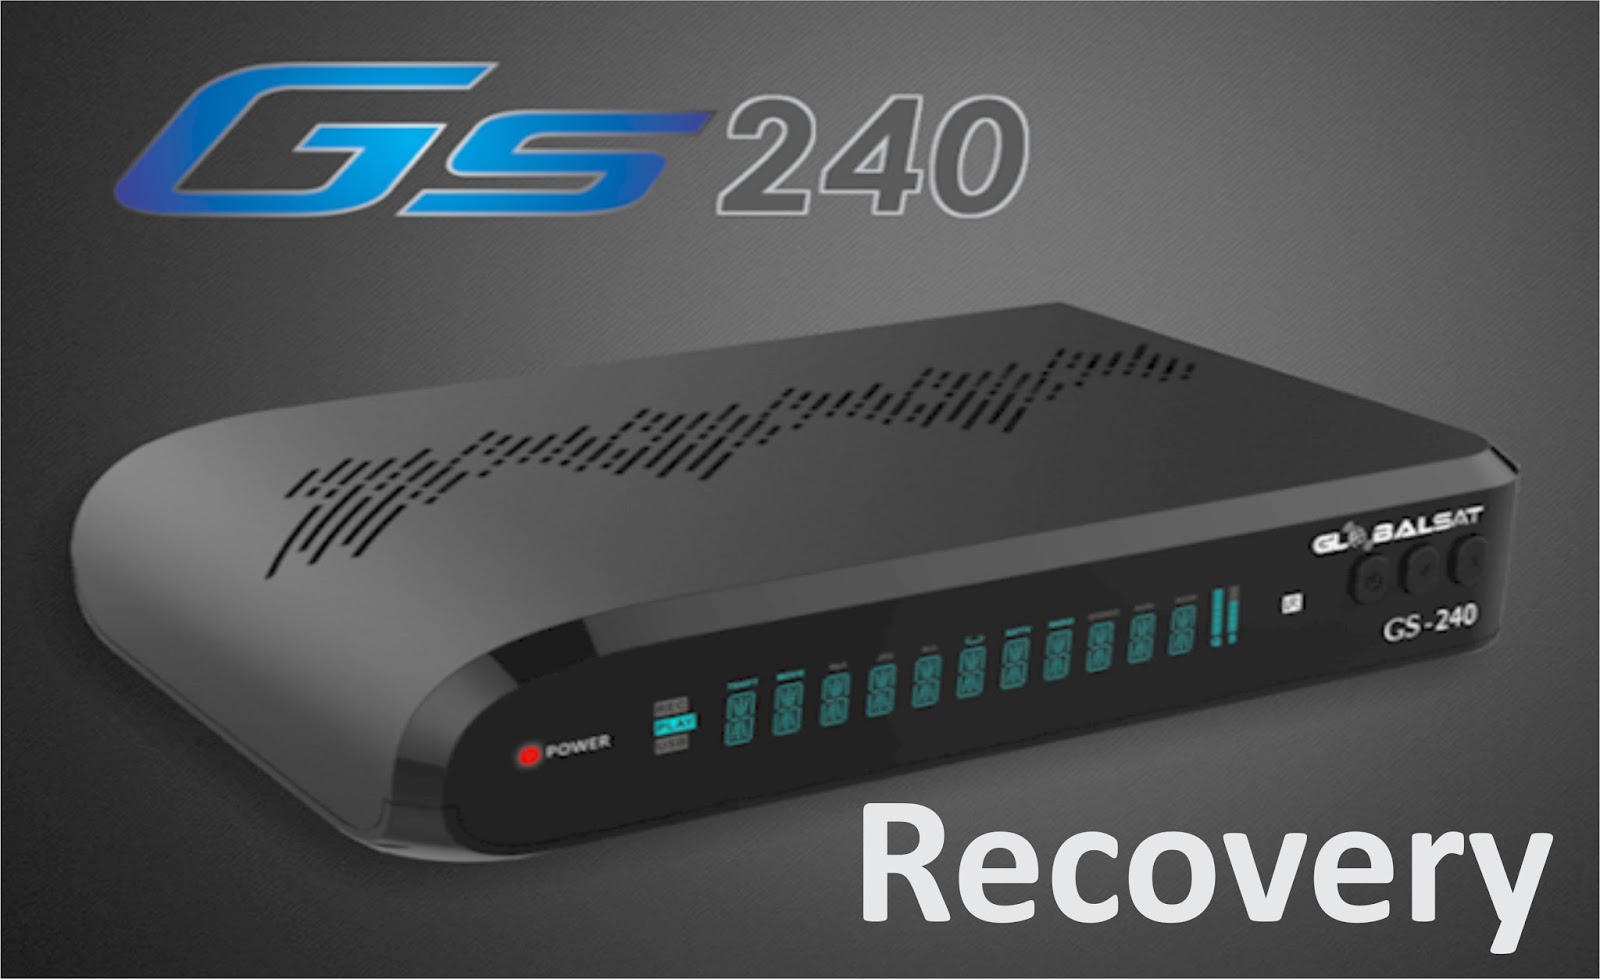 Procedimento de Recovery, Globalsat GS 240